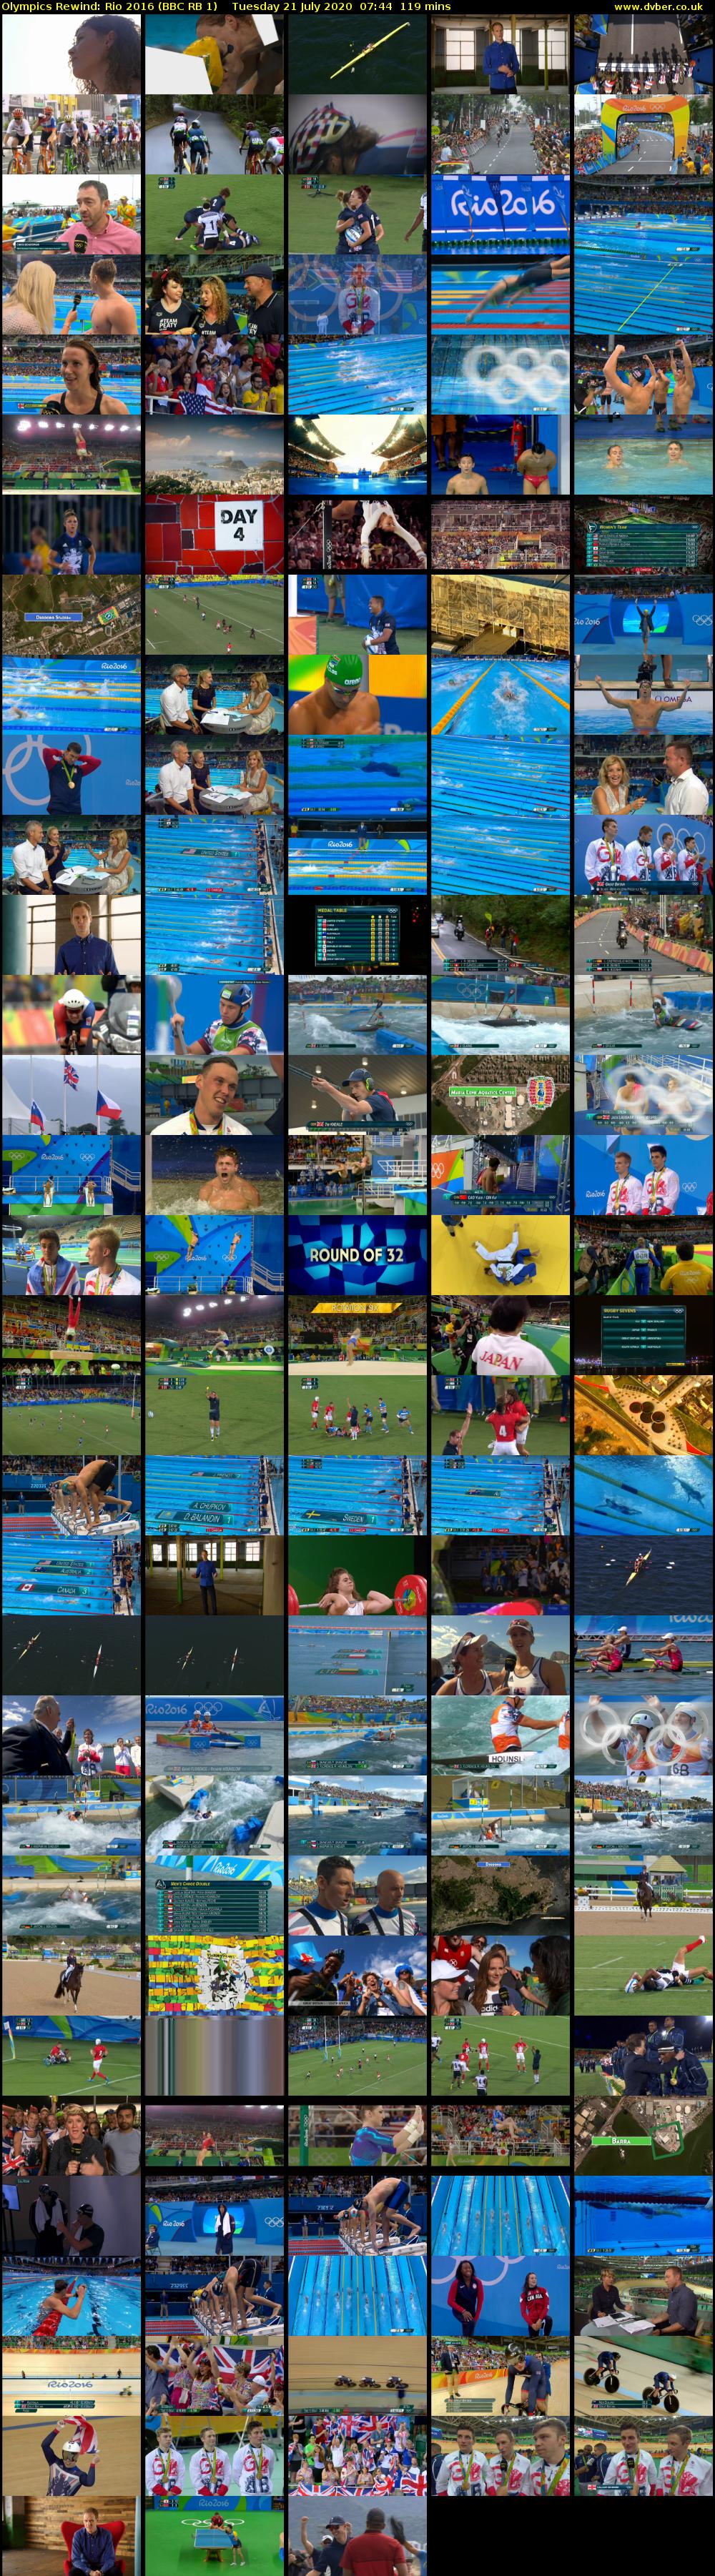 Olympics Rewind: Rio 2016 (BBC RB 1) Tuesday 21 July 2020 07:44 - 09:43